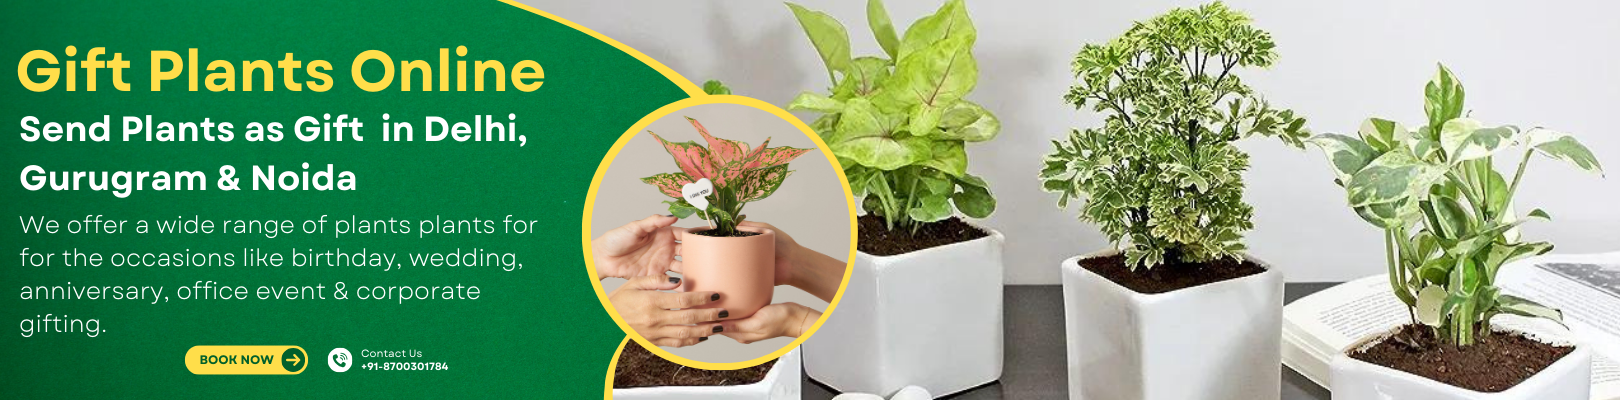 Gift Plants Online in Delhi